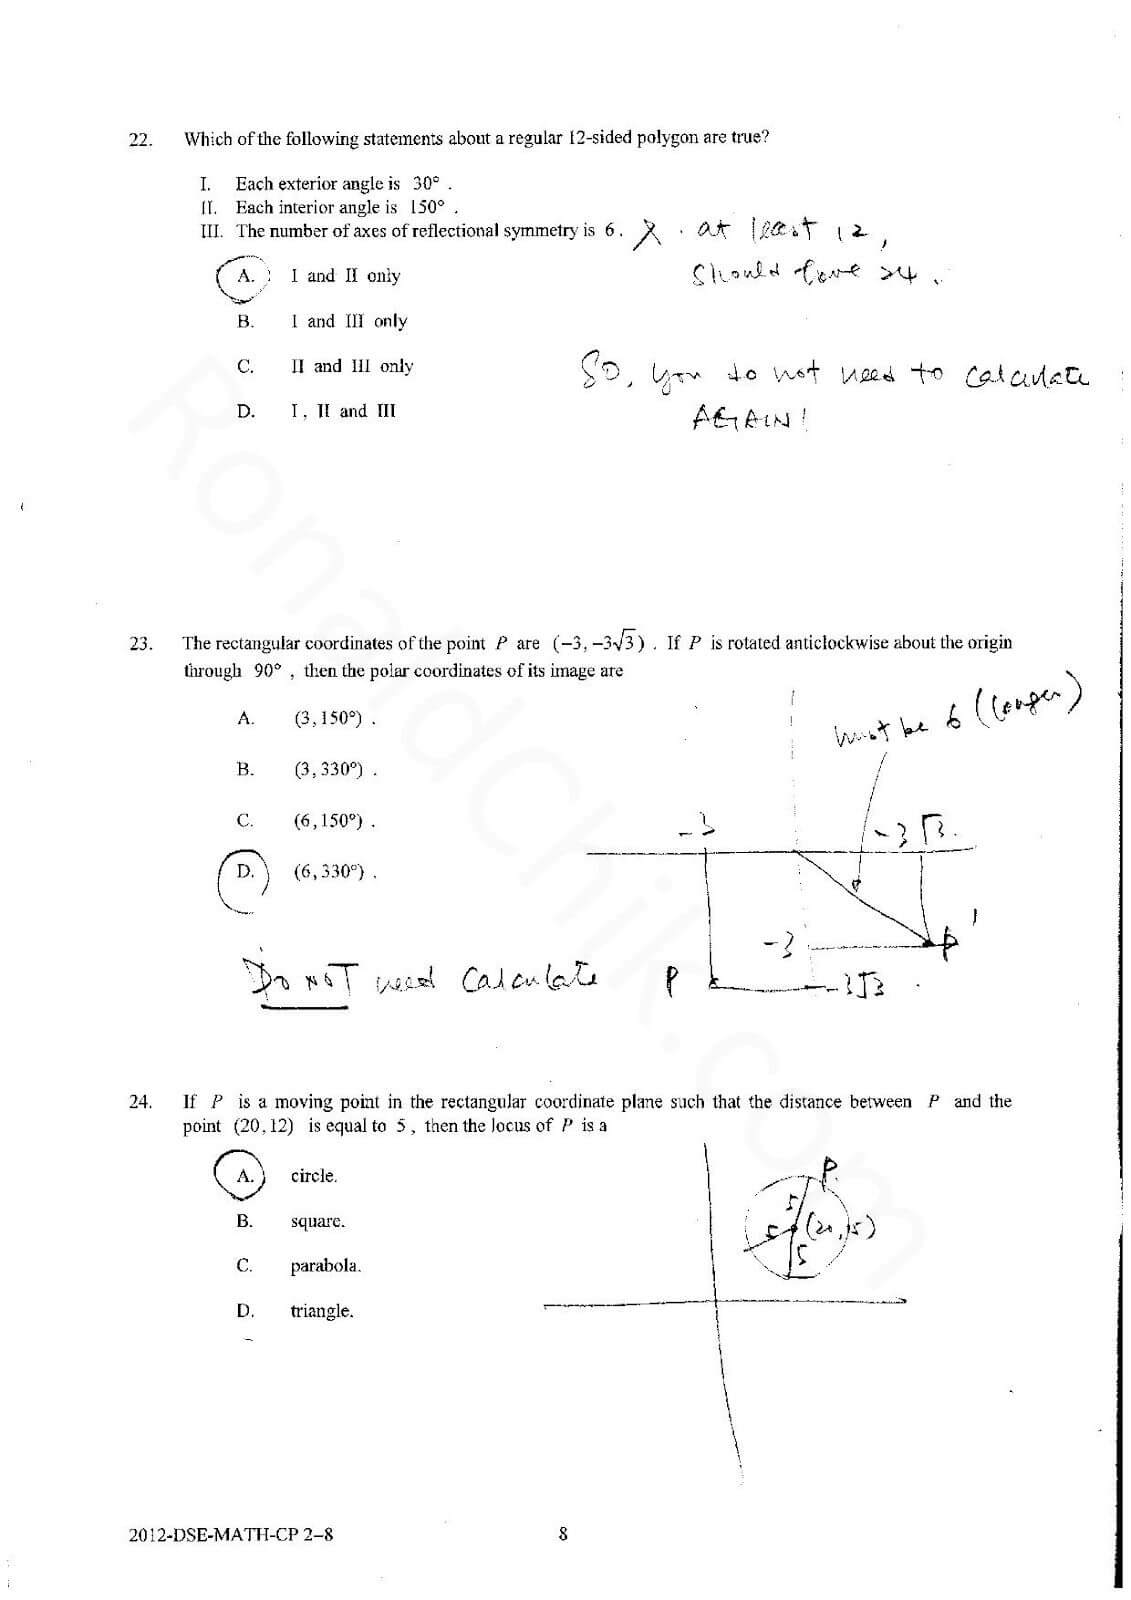 2012 DSE Math P2 卷二 Q22,23,24